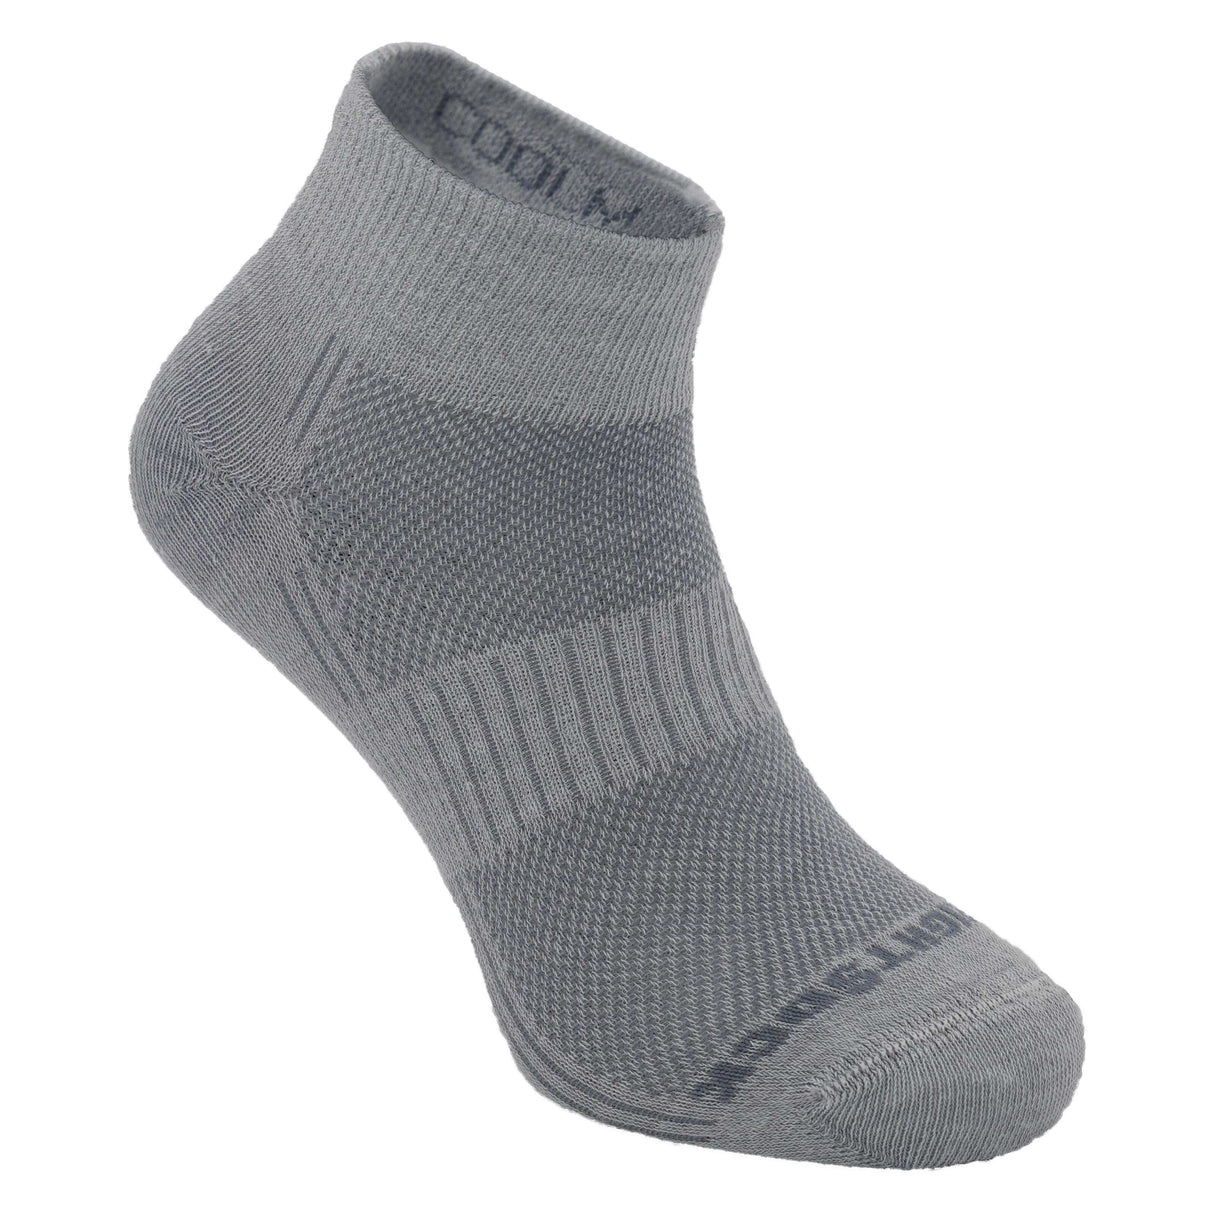 Wrightsock Coolmesh II Quarter Socks  -  Small / Light Grey / Single Pair